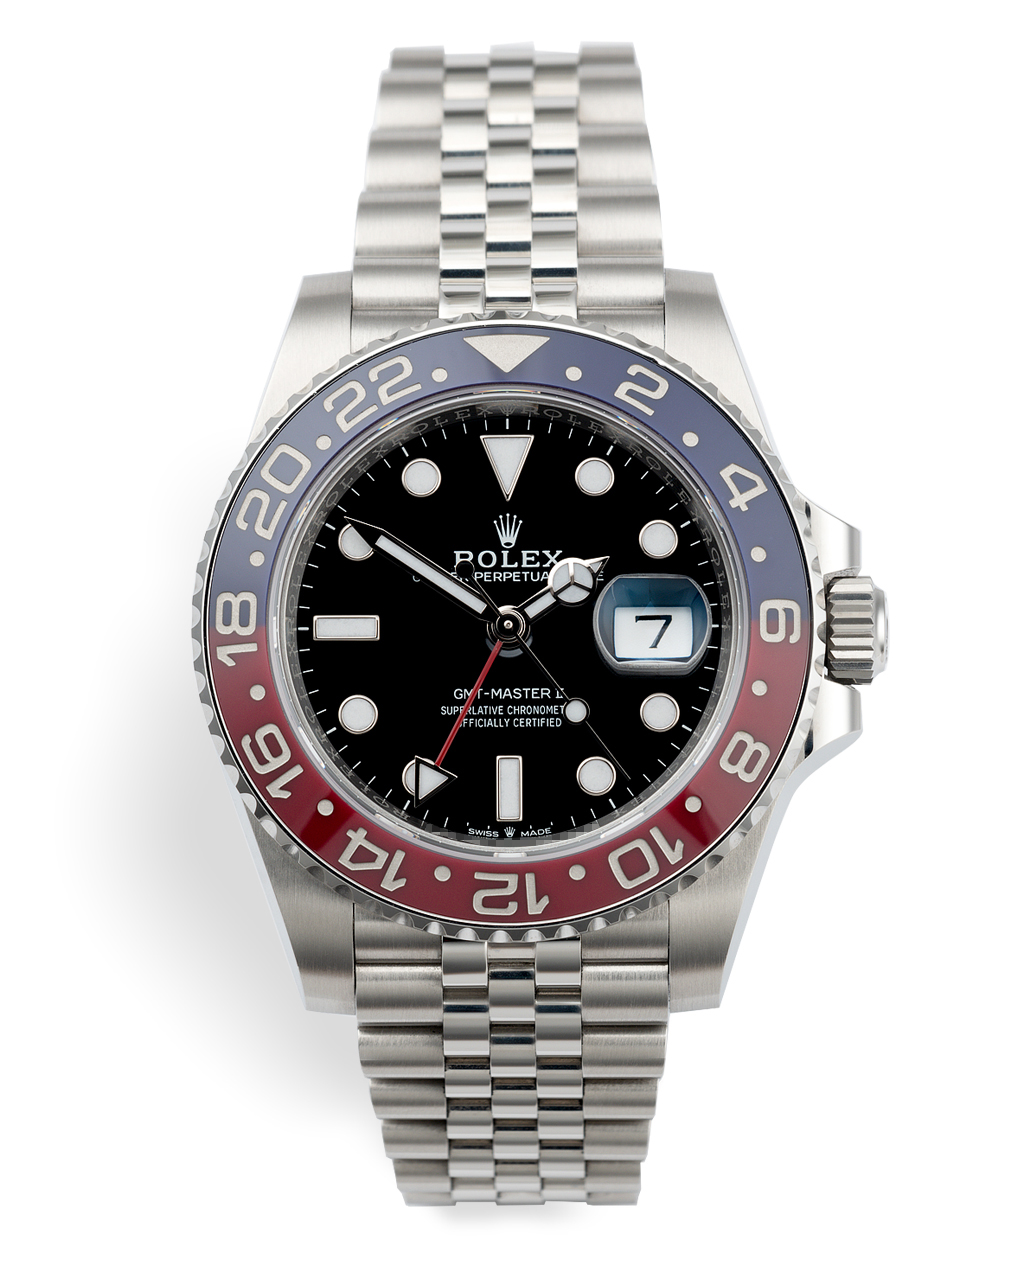 Rolex GMT-Master II Watches | ref 126710BLRO | Latest Model '5 Year ...